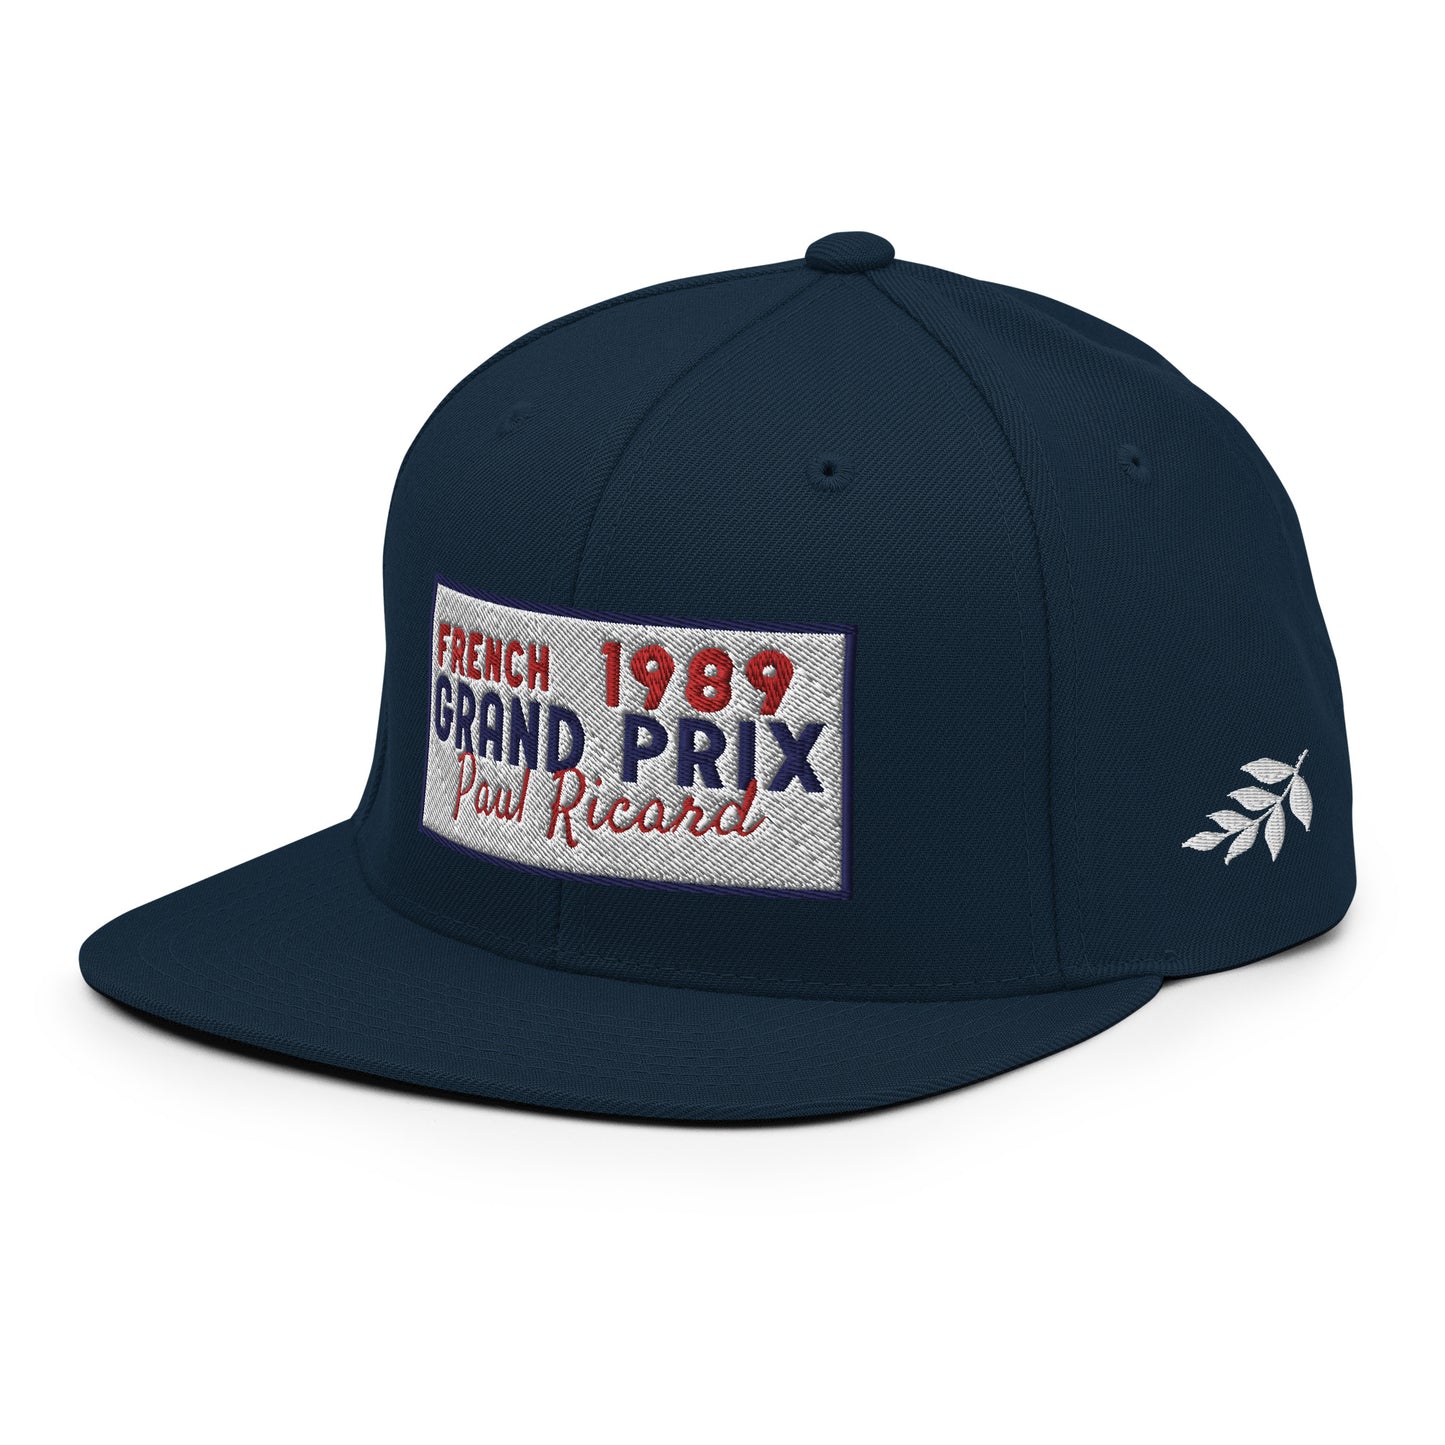 French Grand Prix 1989 Paul Ricard Snapback Hat